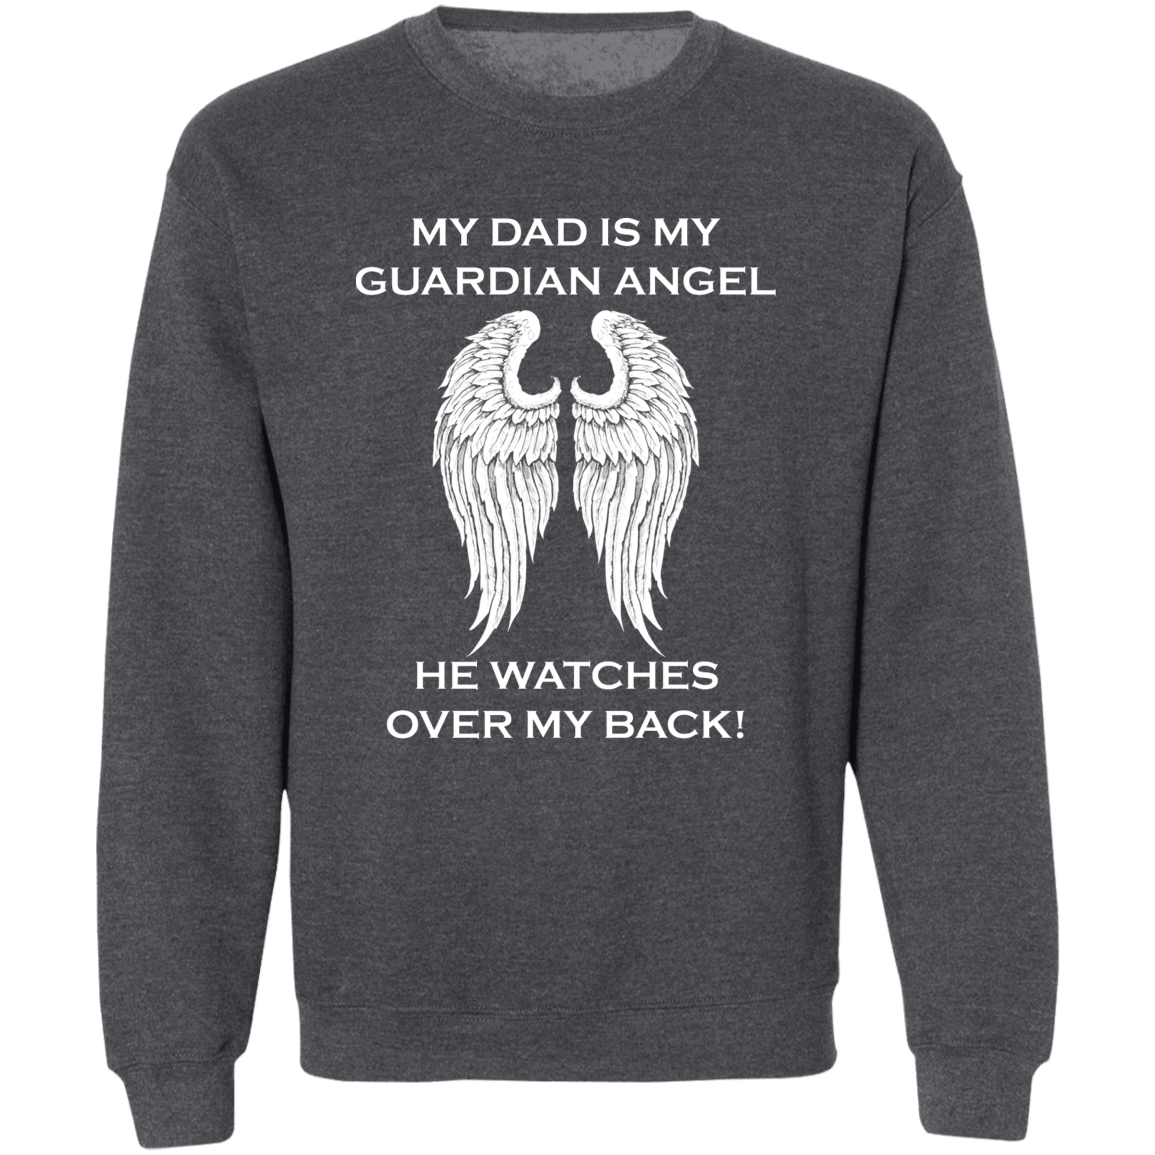 My Dad Is My Guardian Angel Sweatshirt